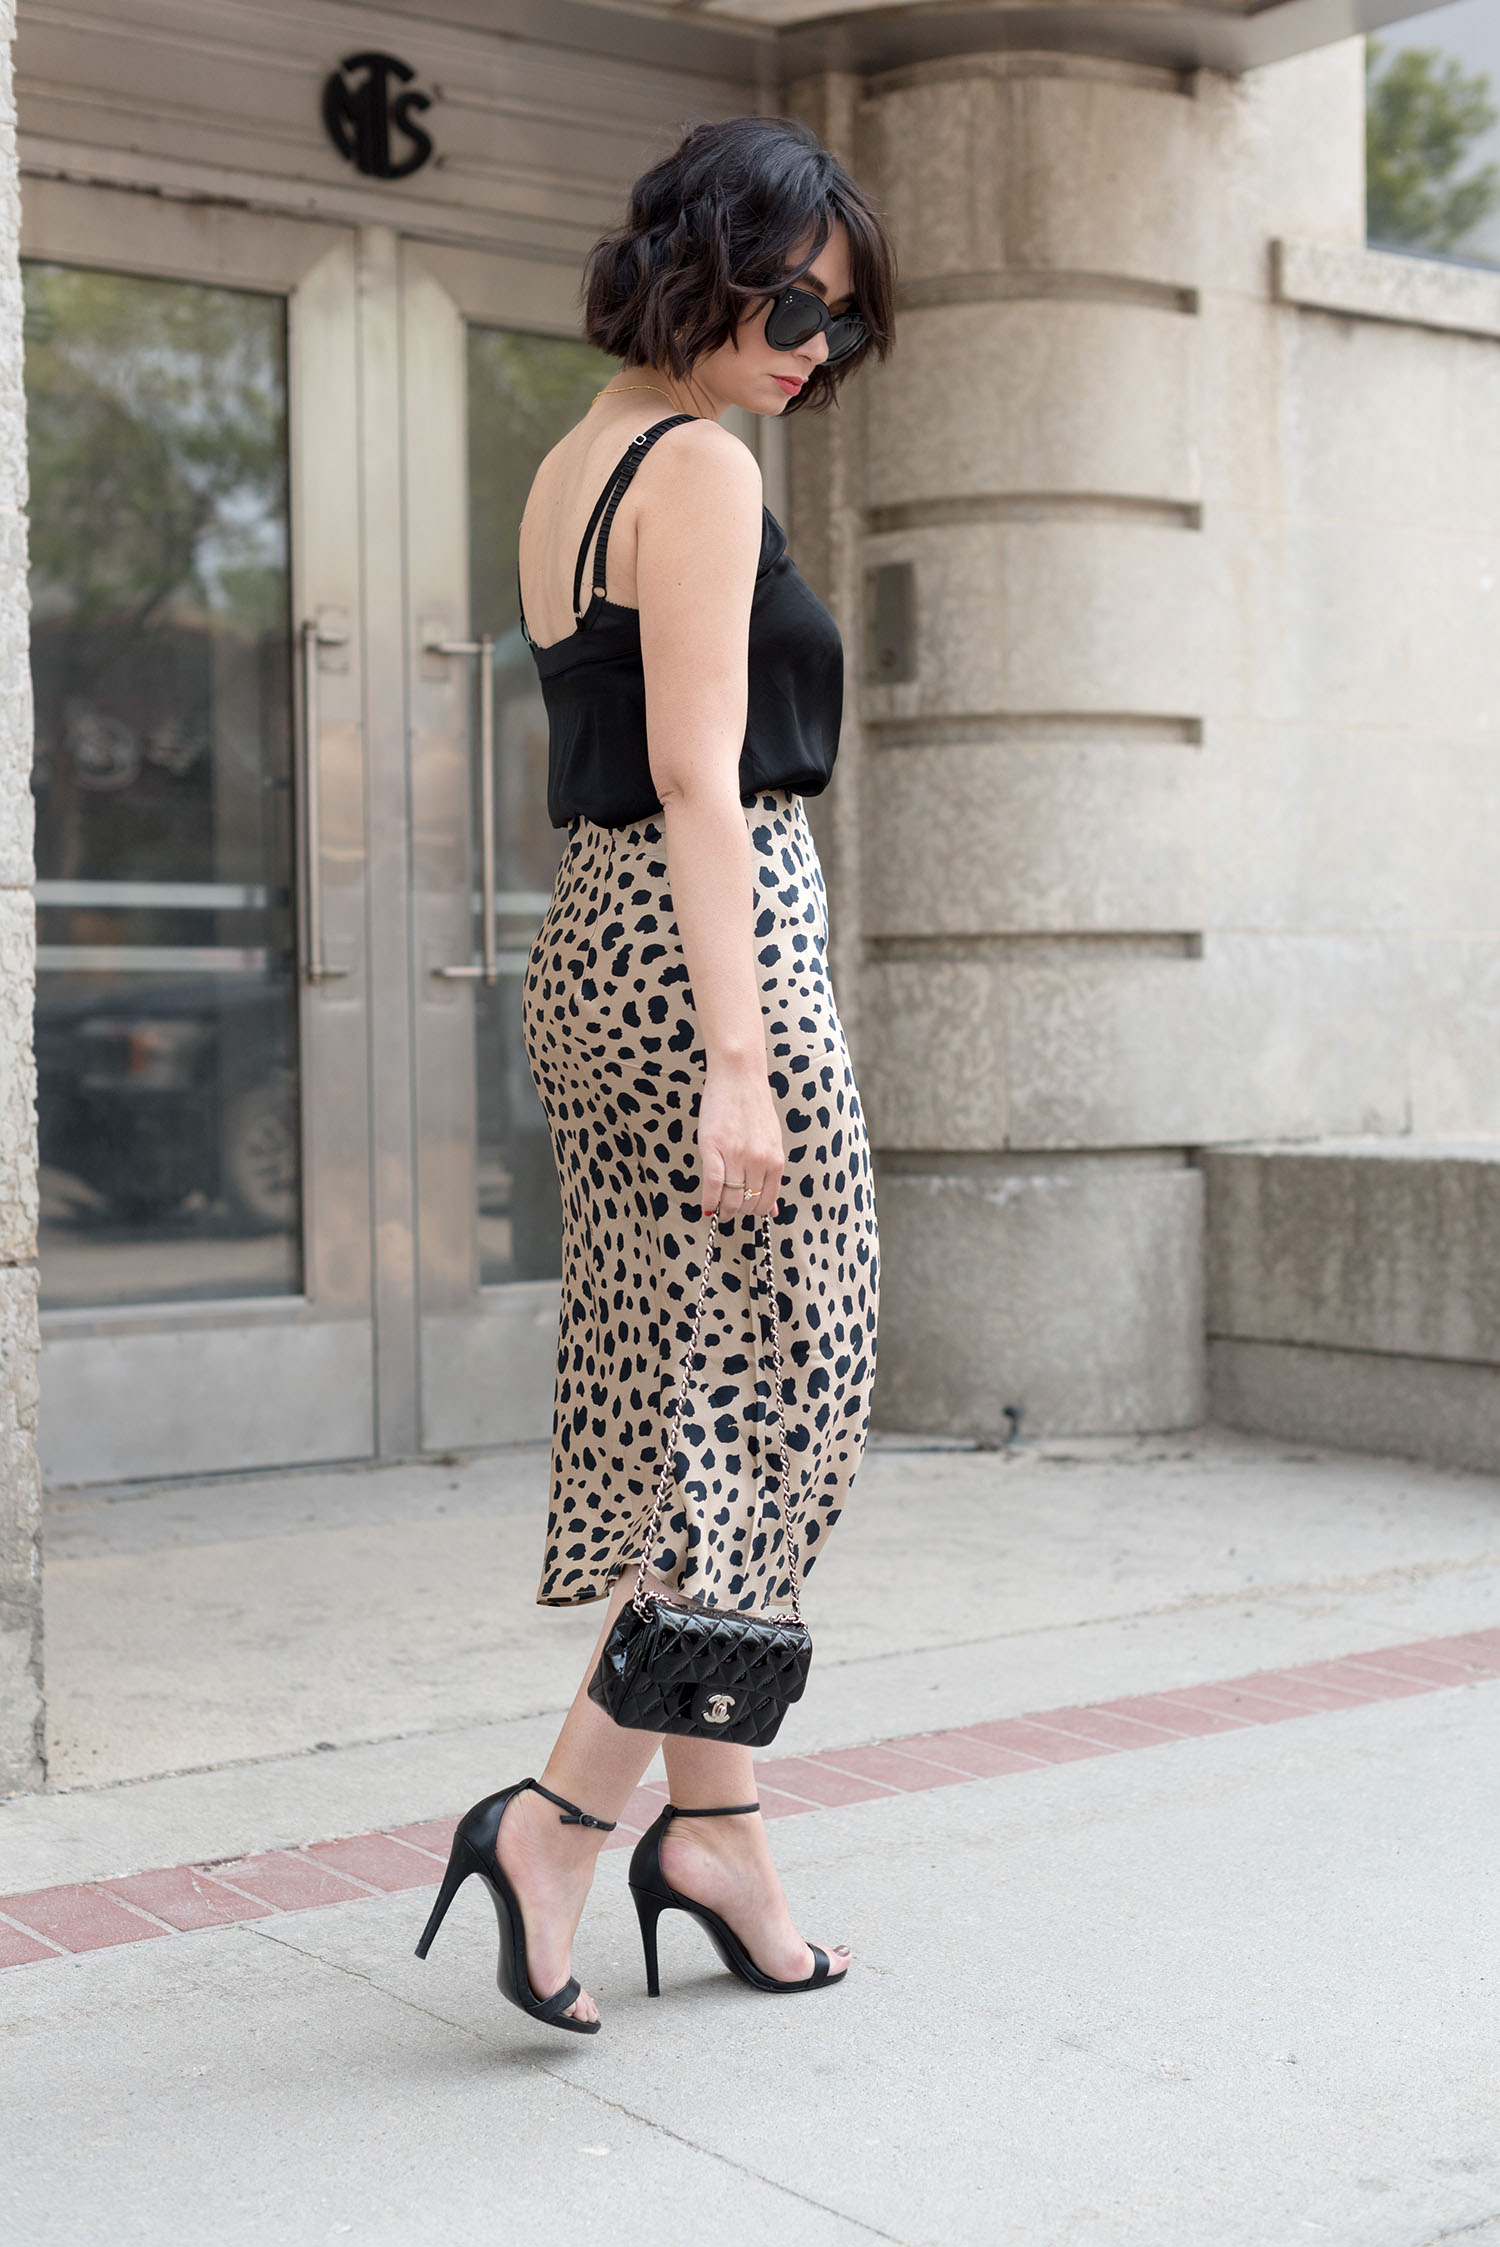 Top Canadian fashion blogger Cee Fardoe of Coco & Vera wears an Aritzia silk tank and Realisation Par silk midi skirt